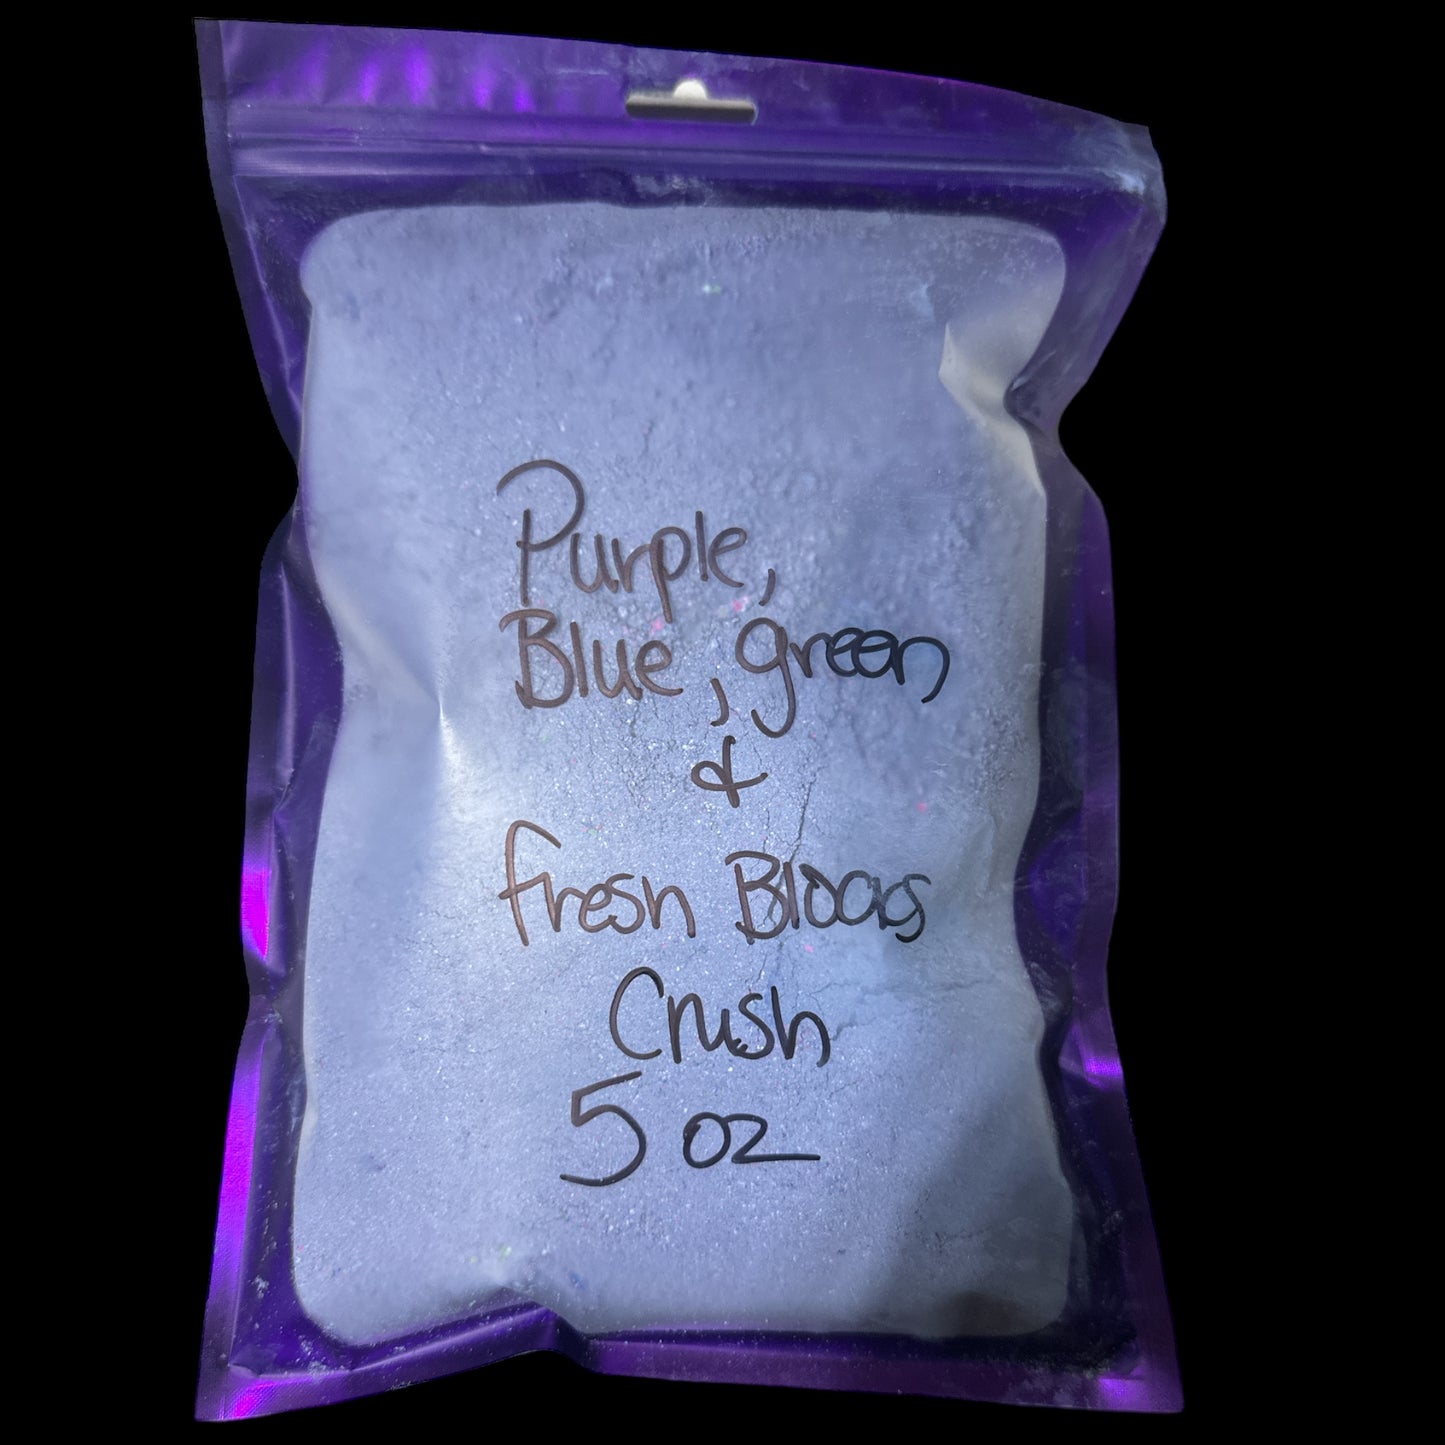 Purple, Blue, Green and Fresh Blocks Powder